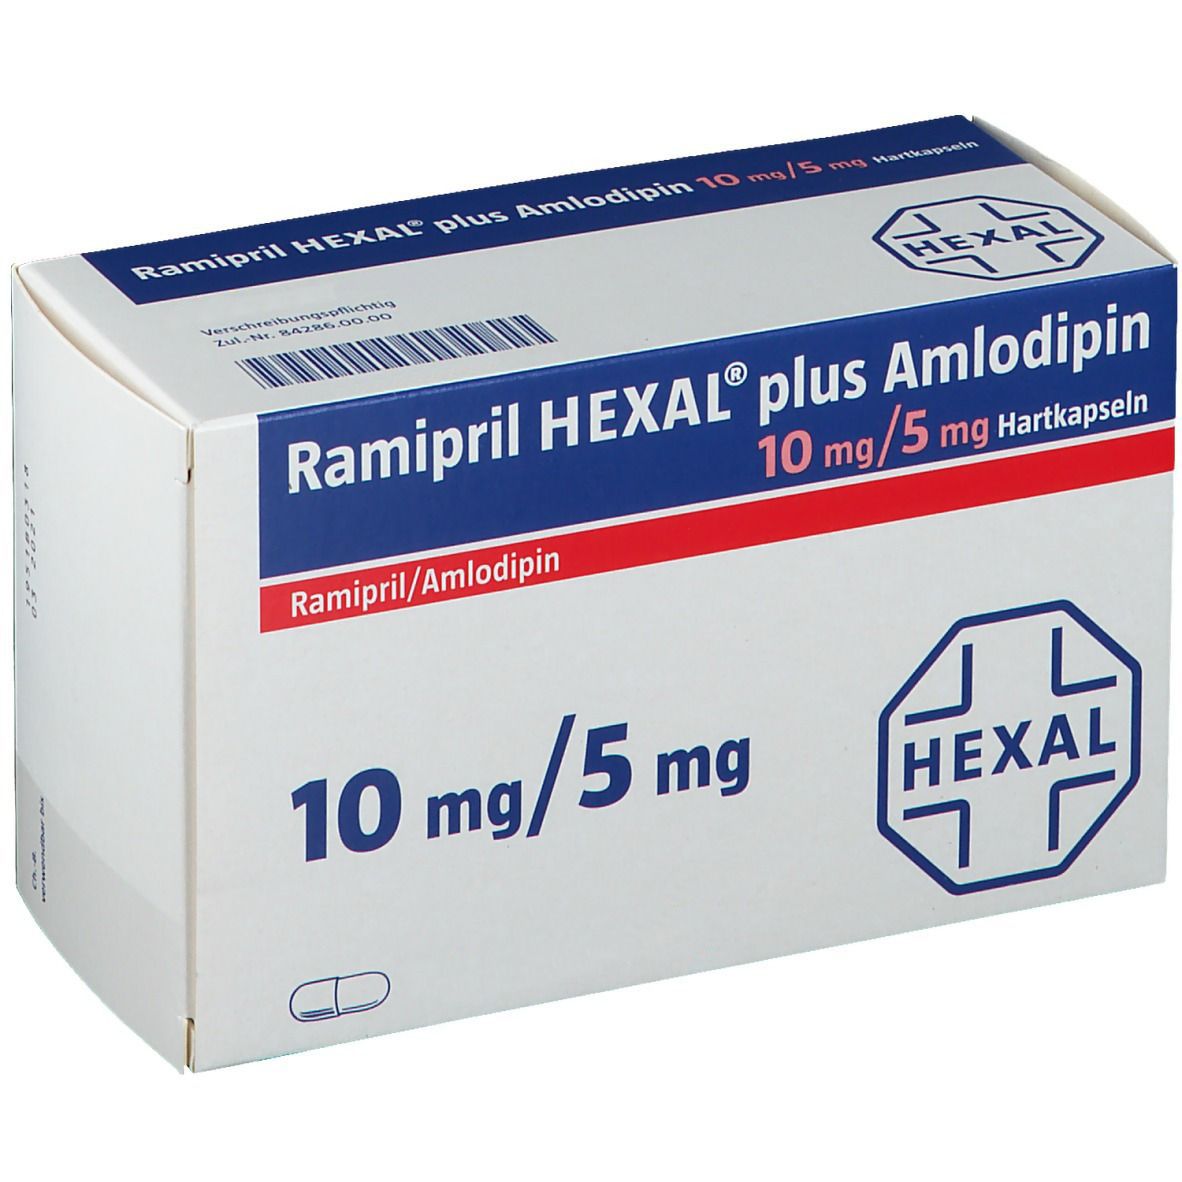 Ramipril HEXAL® plus Amlodipin 10 mg/5 mg